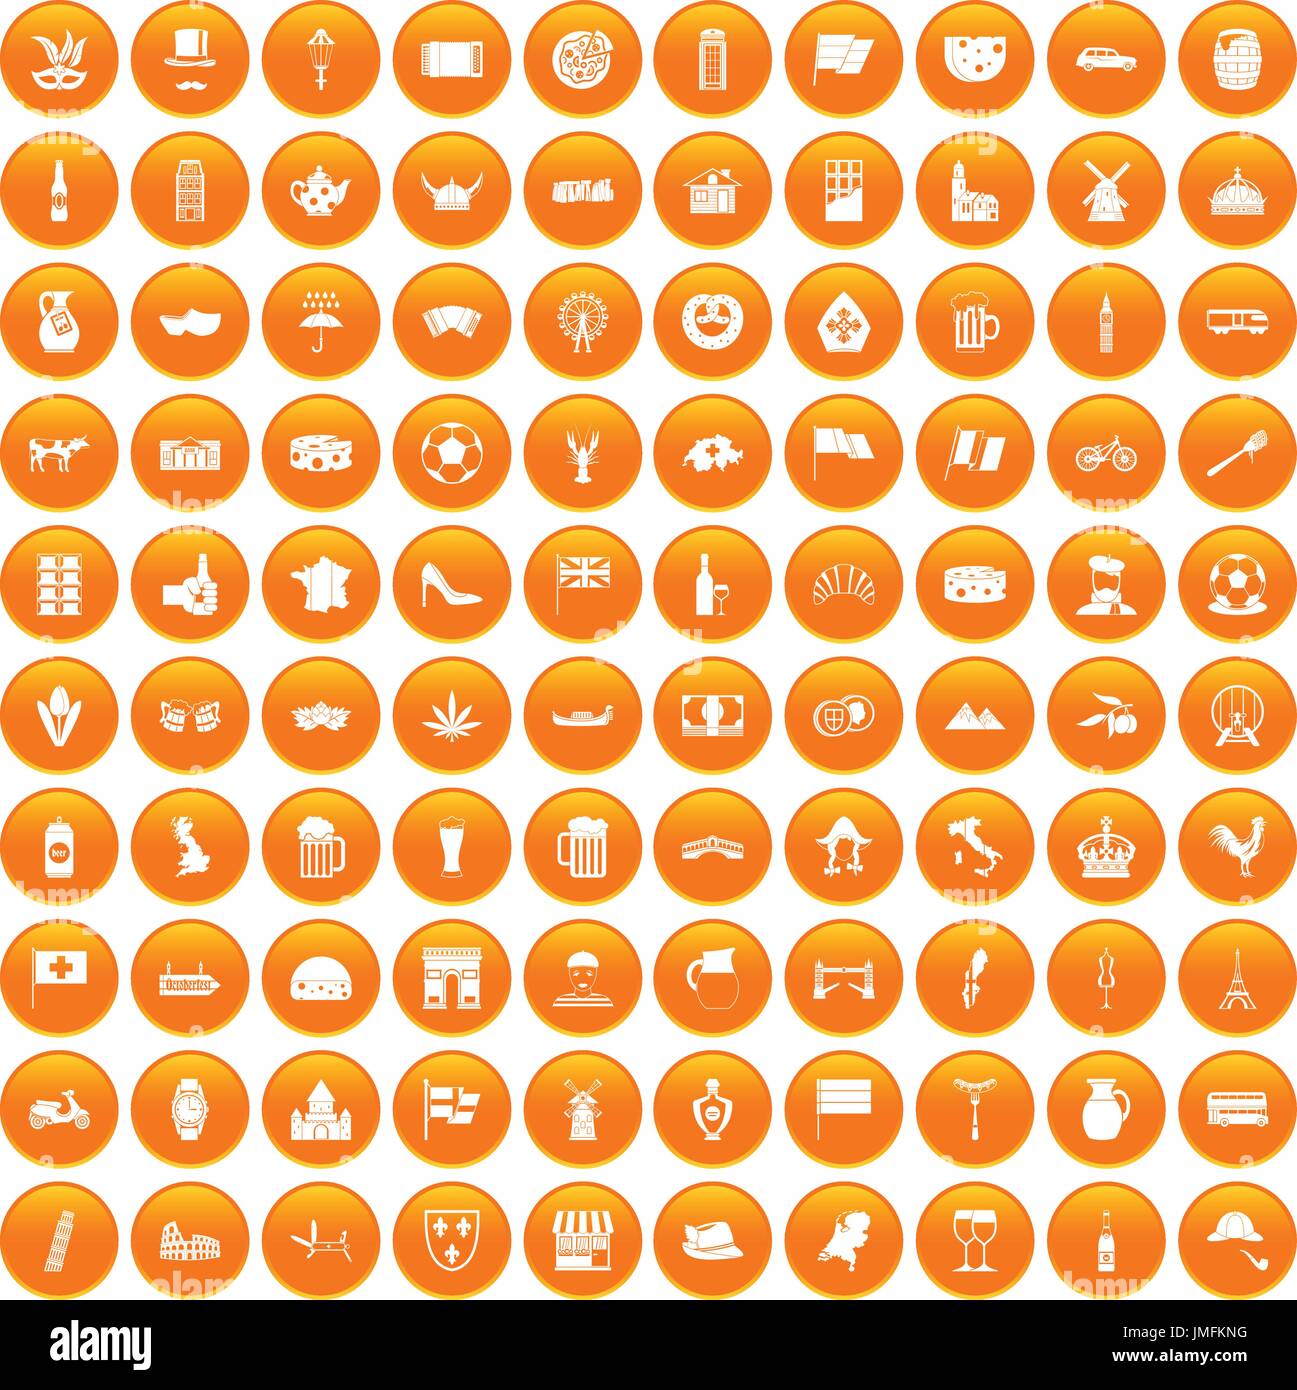 100 europe countries icons set orange Stock Vector